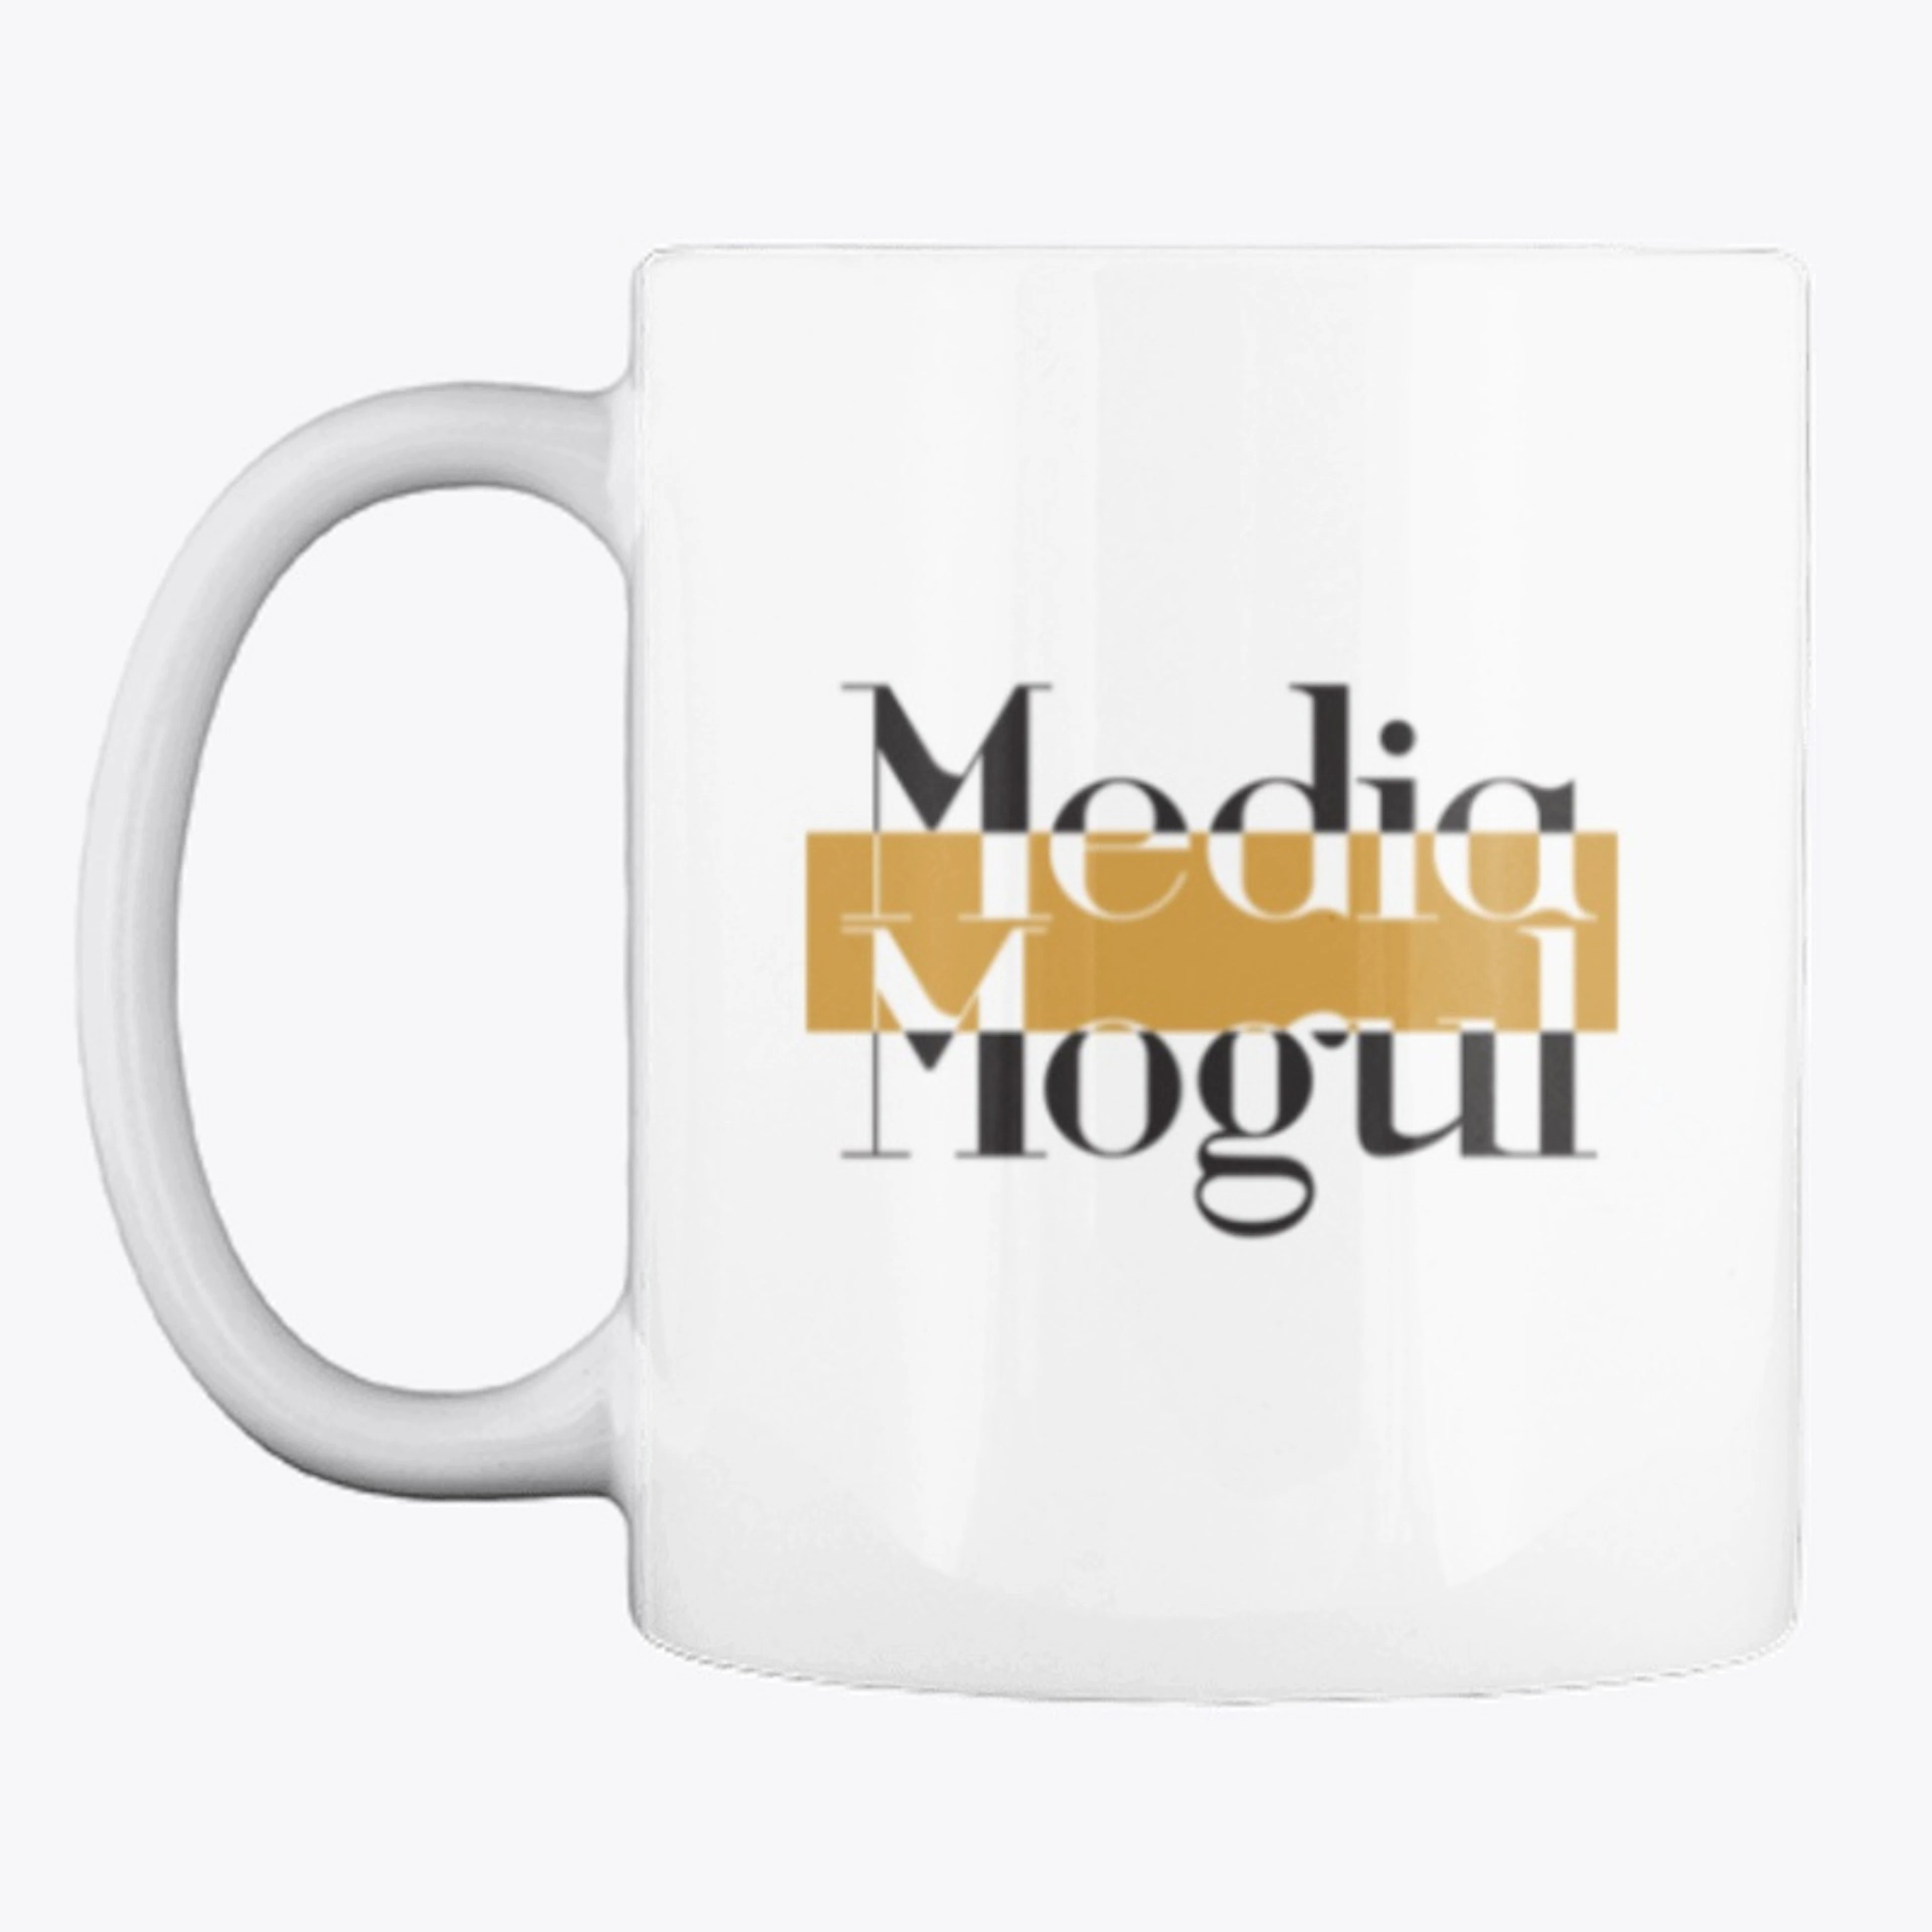 Media Mogul Mug